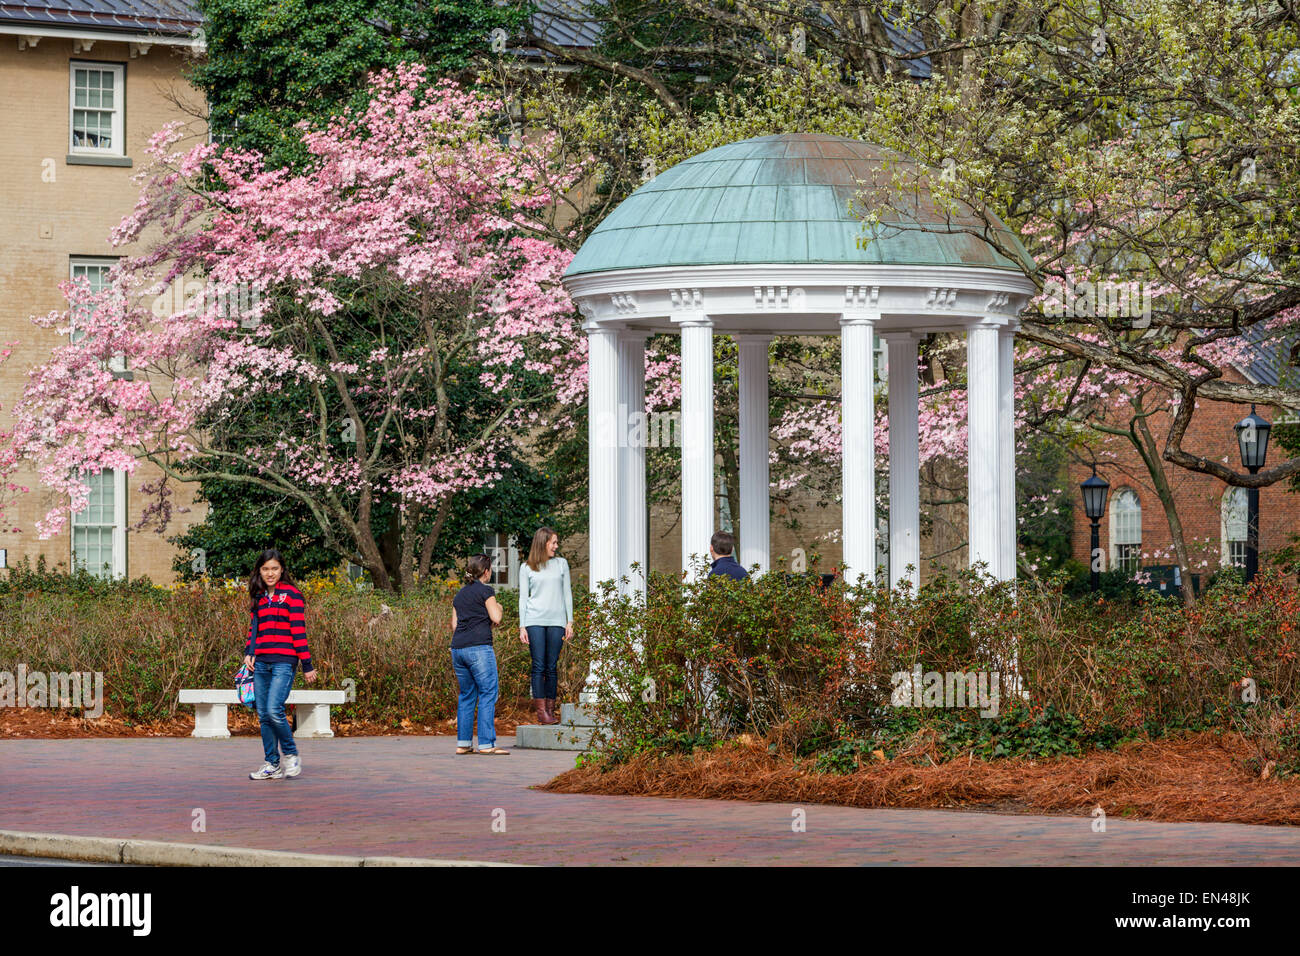 University of North Carolina aka UNC, Chapel Hill, North Carolina. Stock Photo